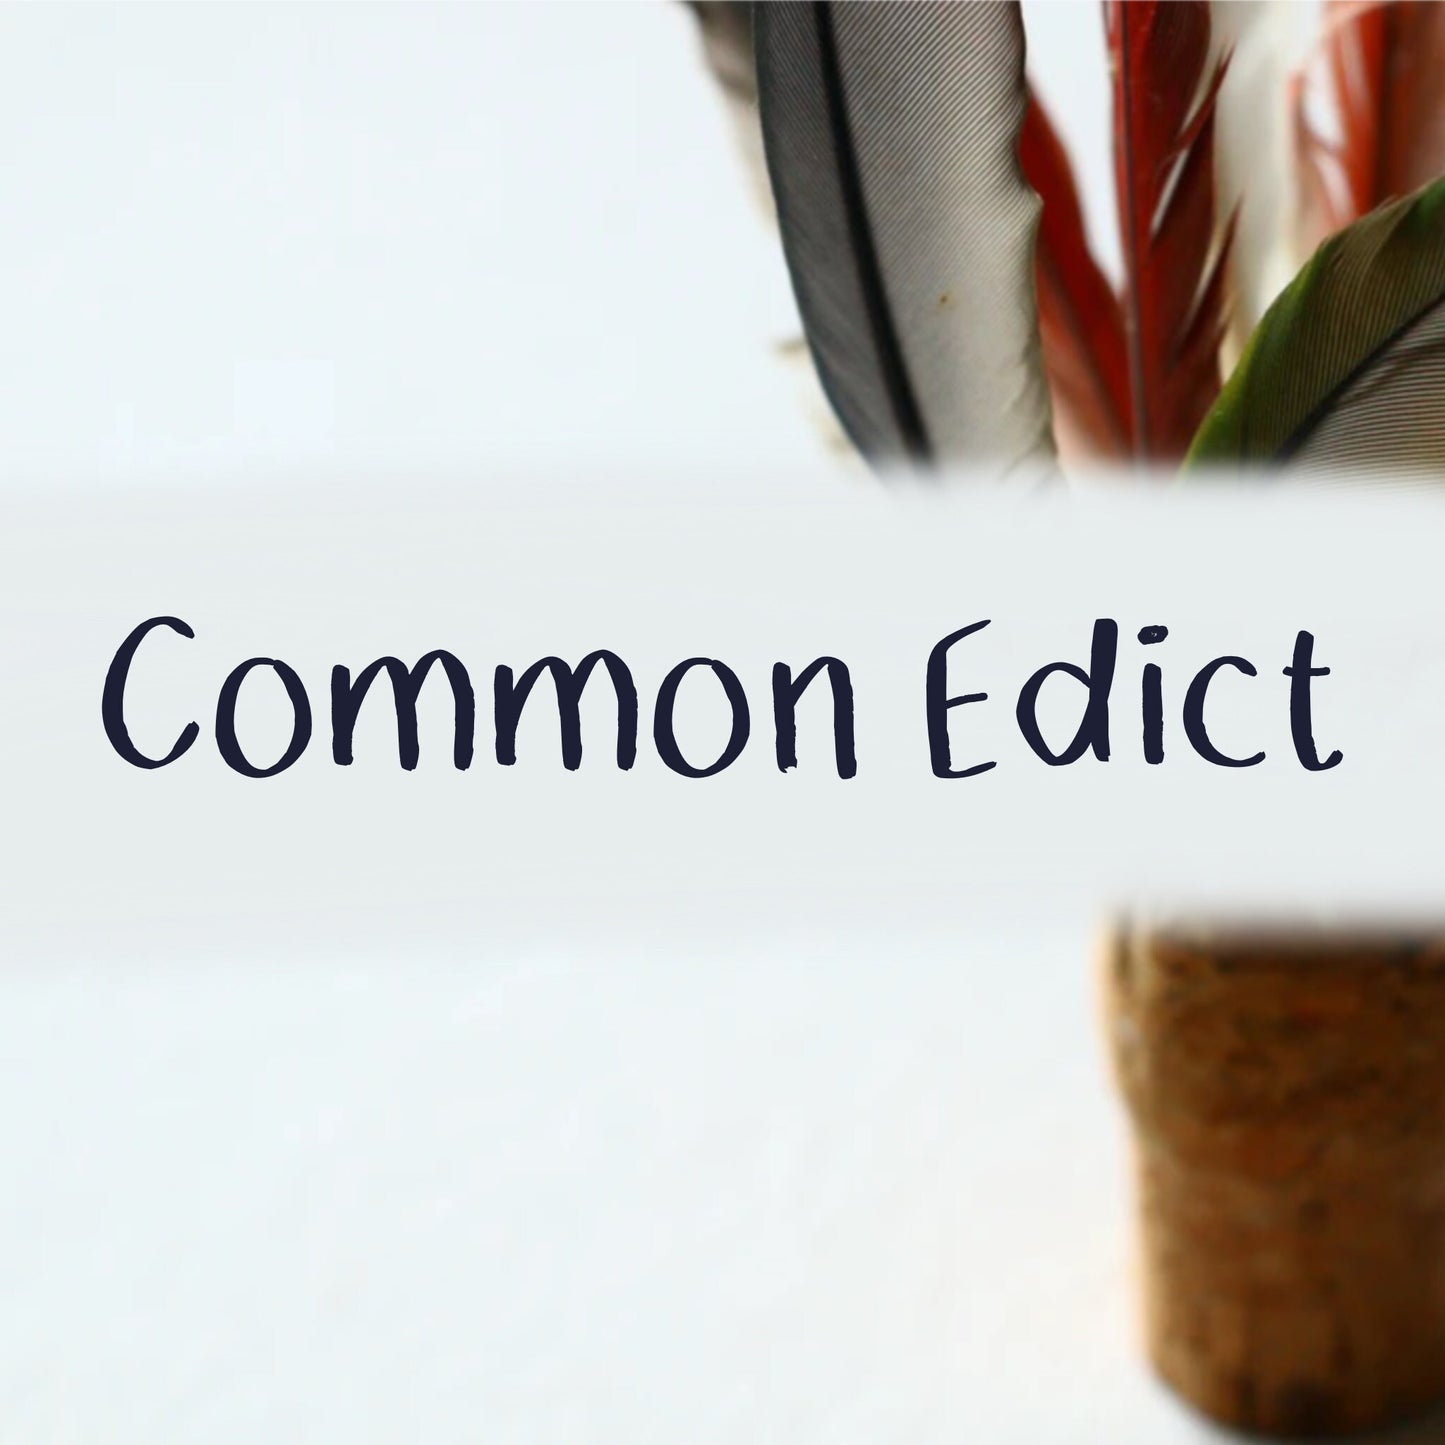 Common Edict - Digital Font